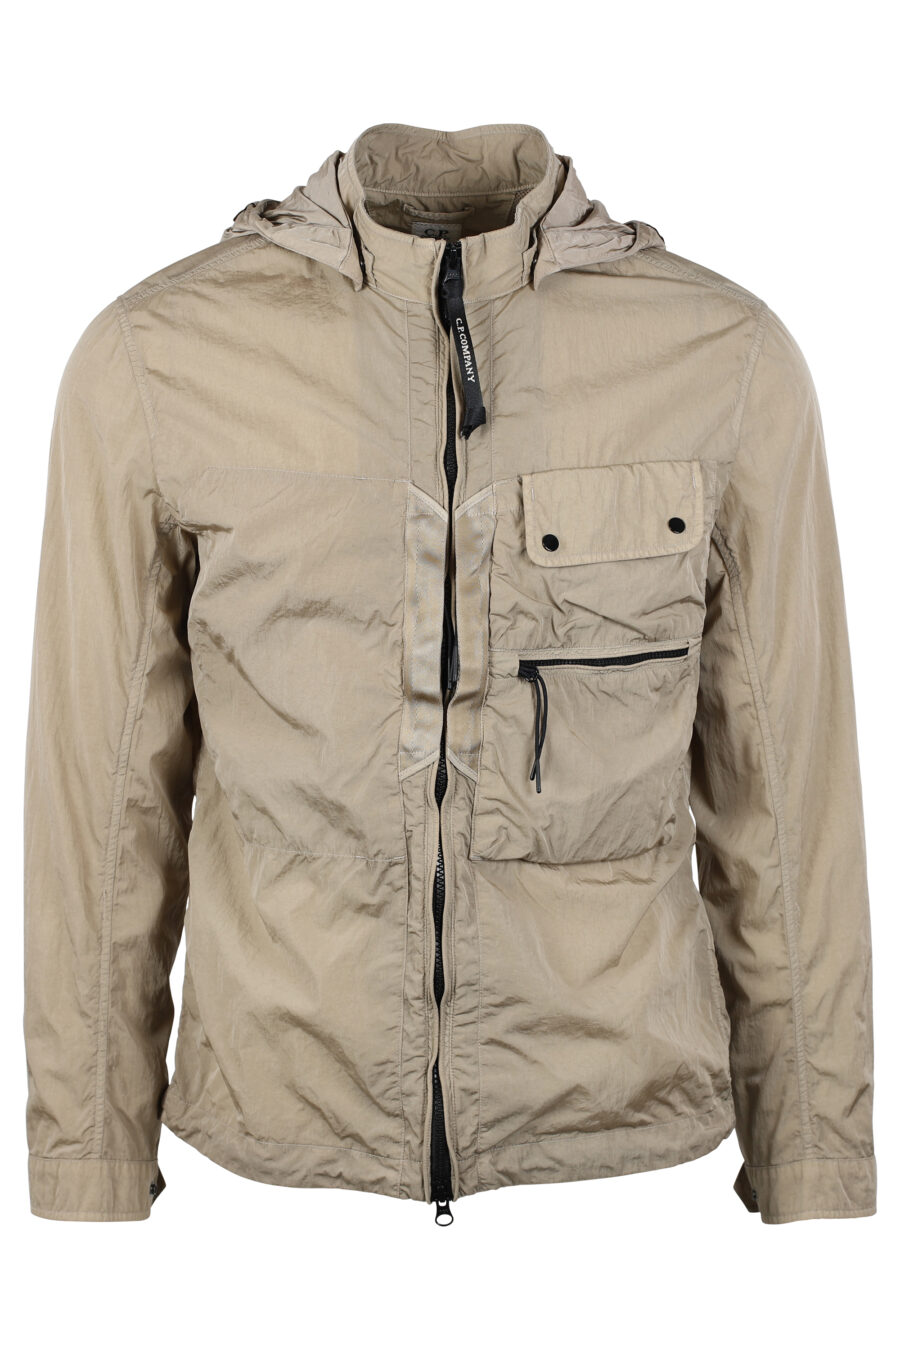 Beige jacket with adjustable glasses hood - IMG 4646